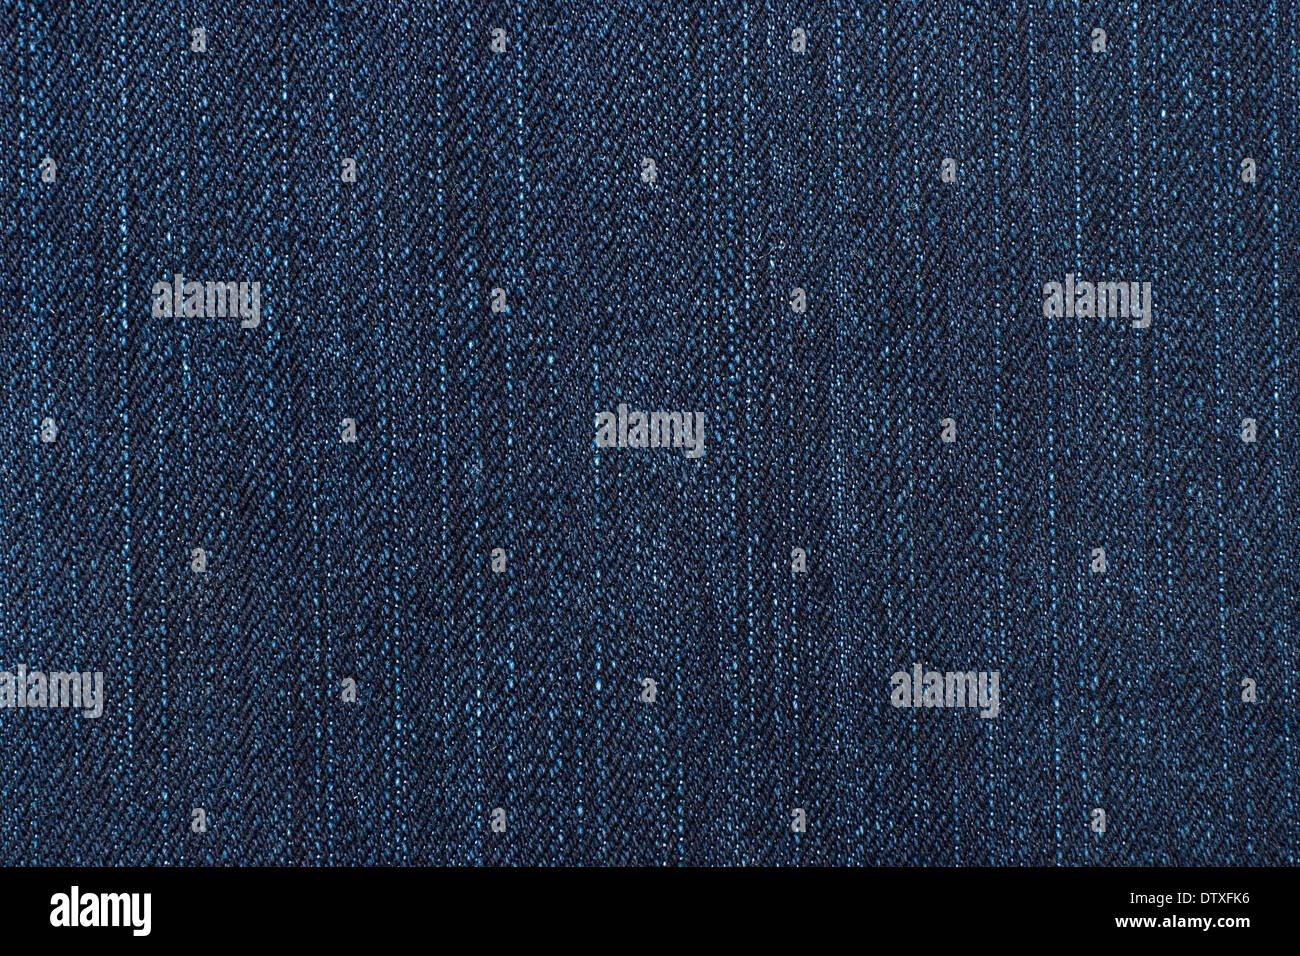 Denim textile background Stock Photo